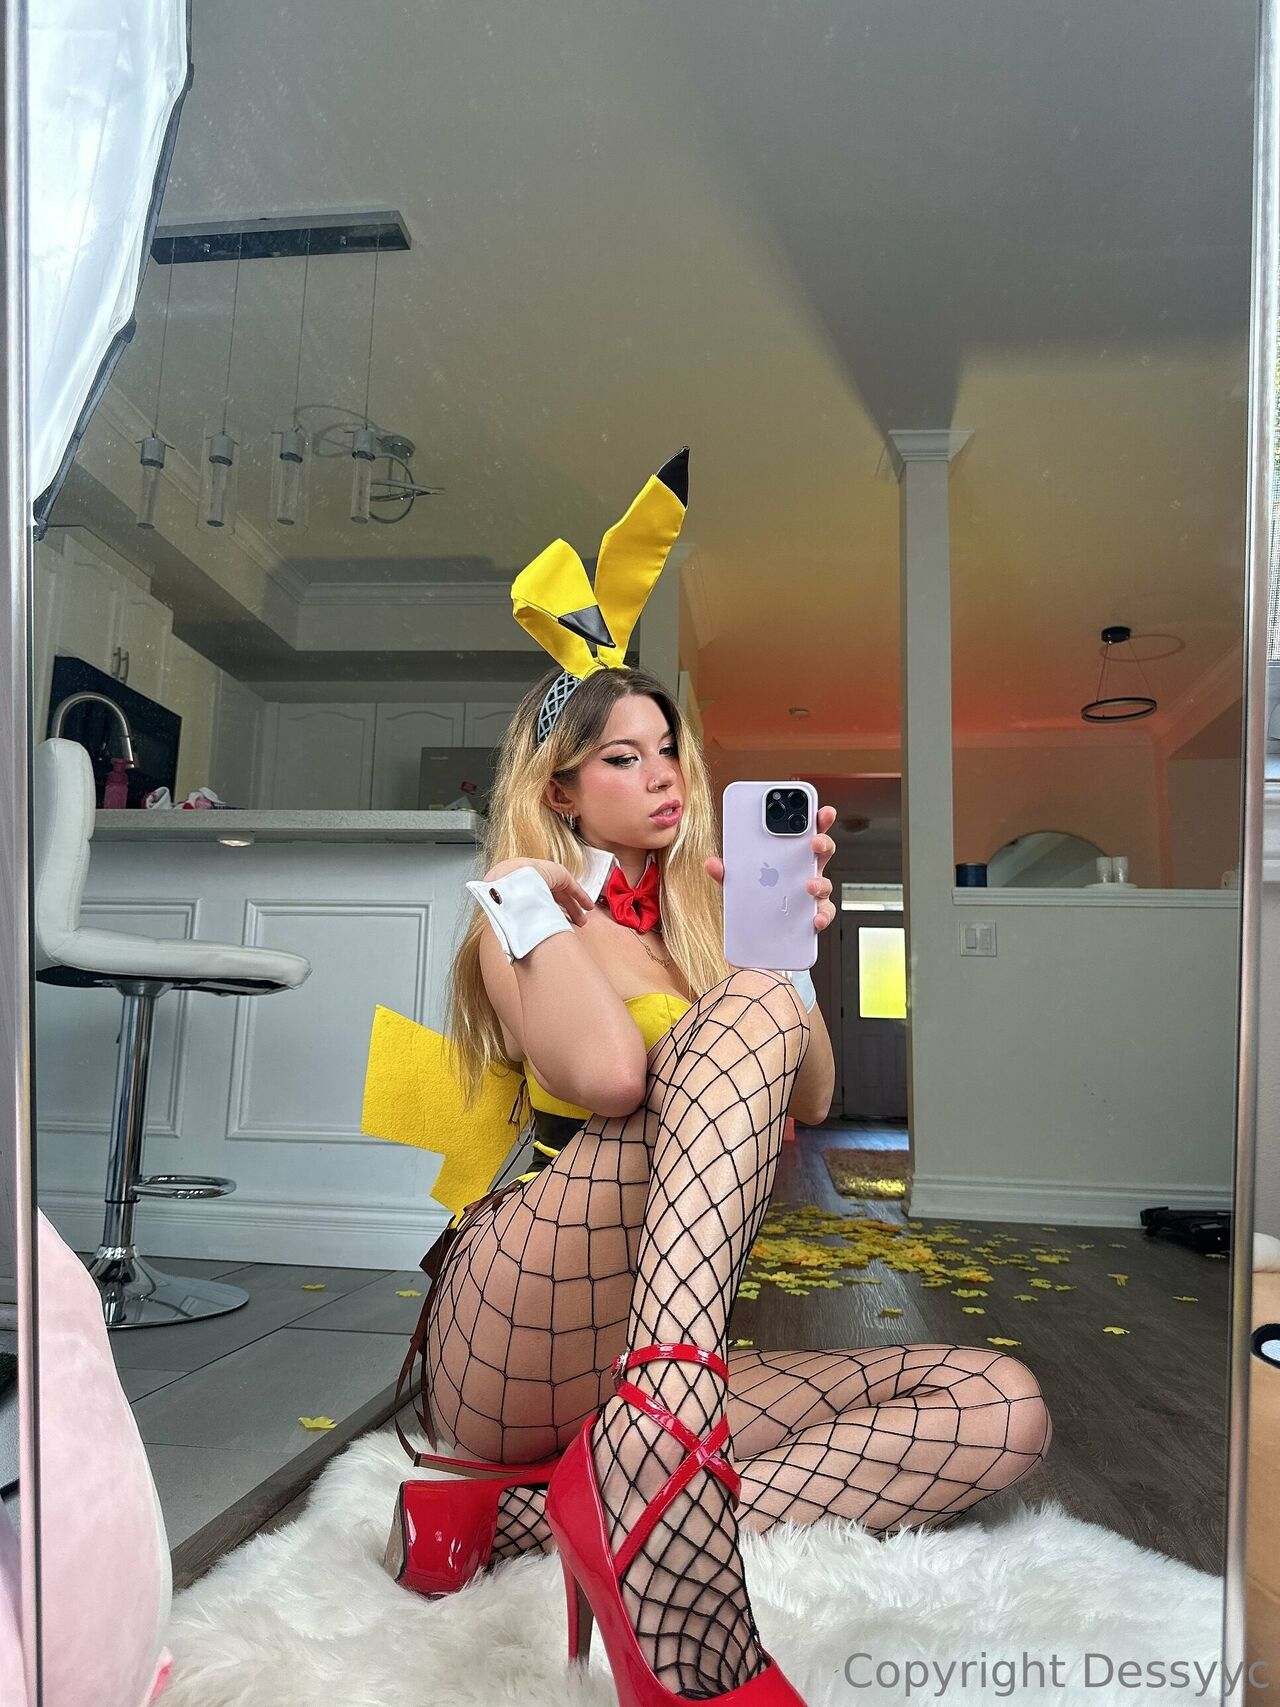 Dessyyc – Pikachu bunny girl